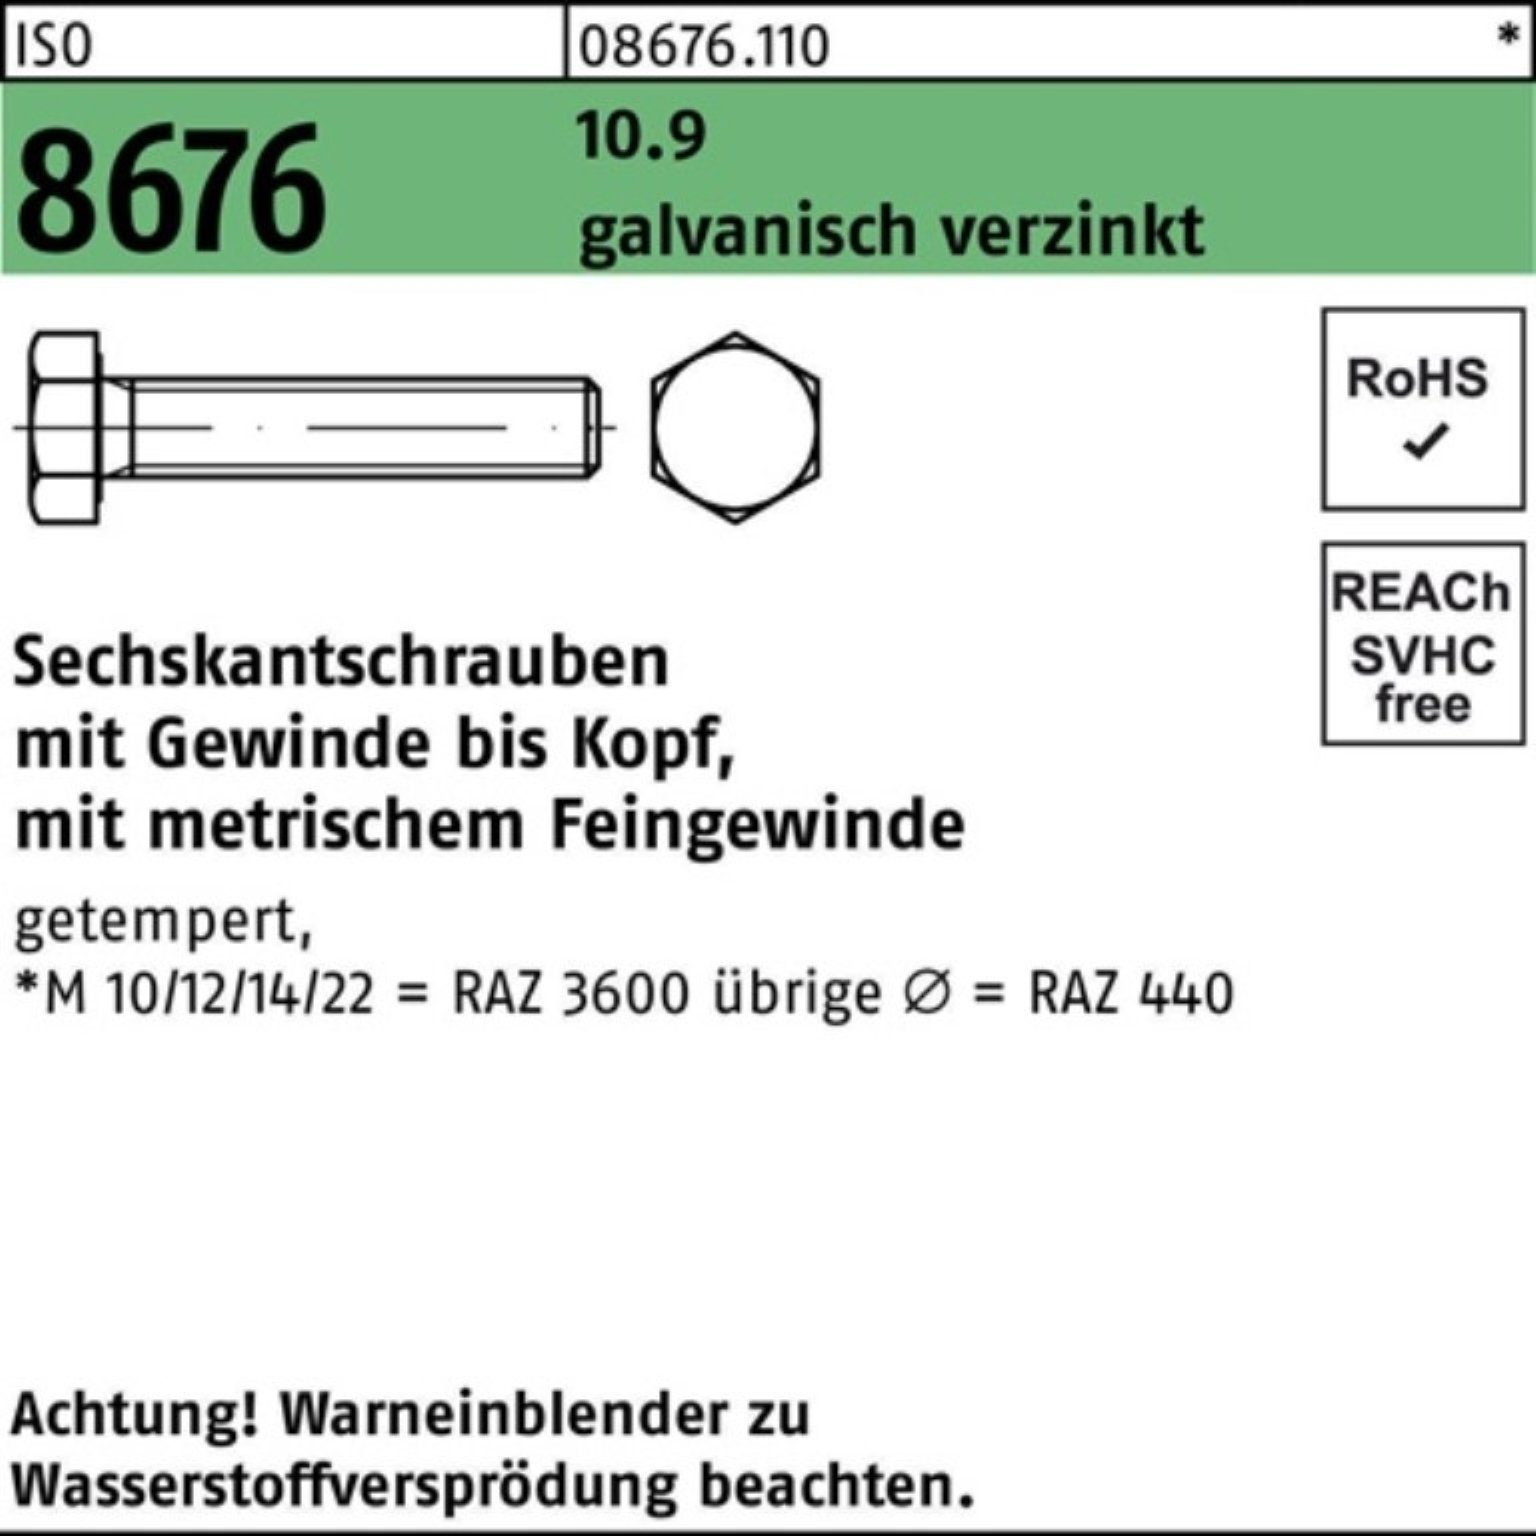 Reyher Sechskantschraube 100er Pack Sechskantschraube M16x1,5x 55 VG 8676 10.9 5 ISO galv.verz